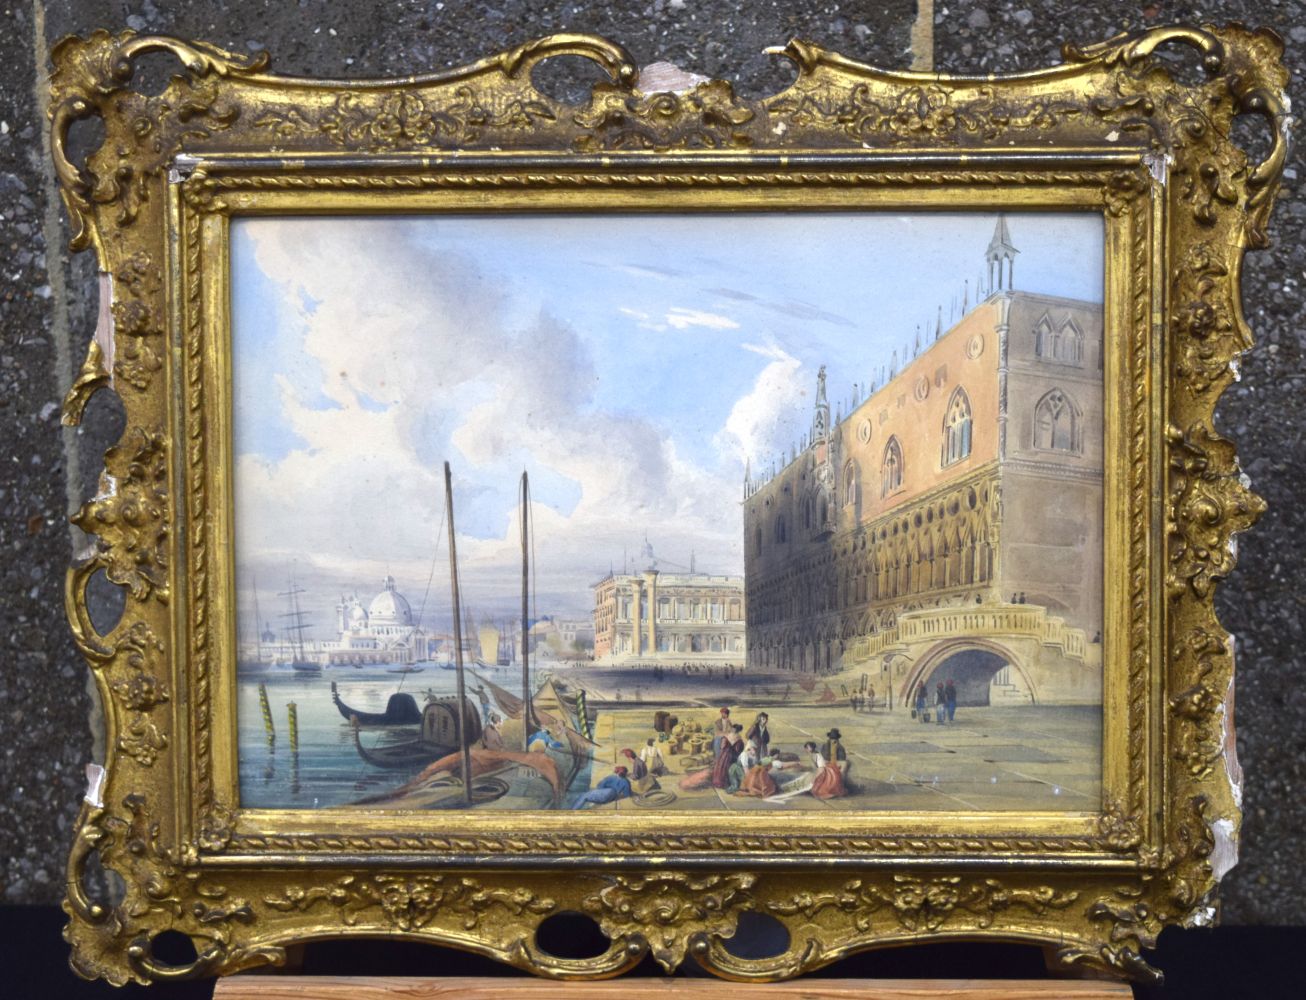 Italian School (19th Century) Watercolour, Venetian canal. Image 29 cm x 38 cm.